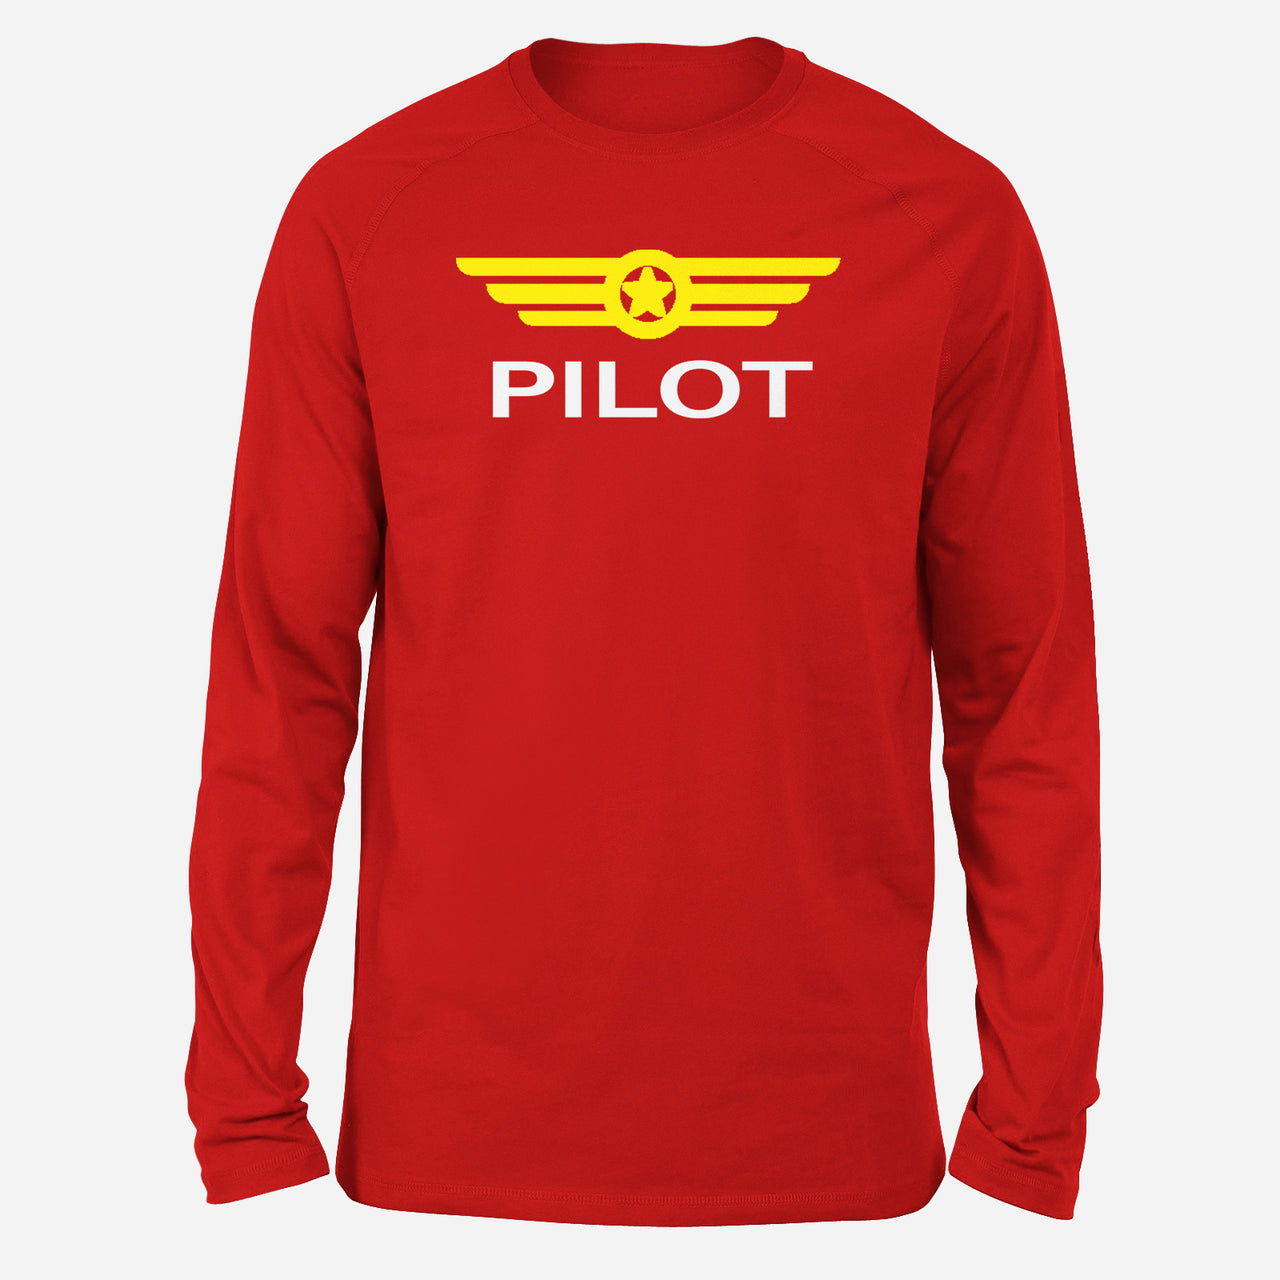 Pilot & Badge Designed Long-Sleeve T-Shirts